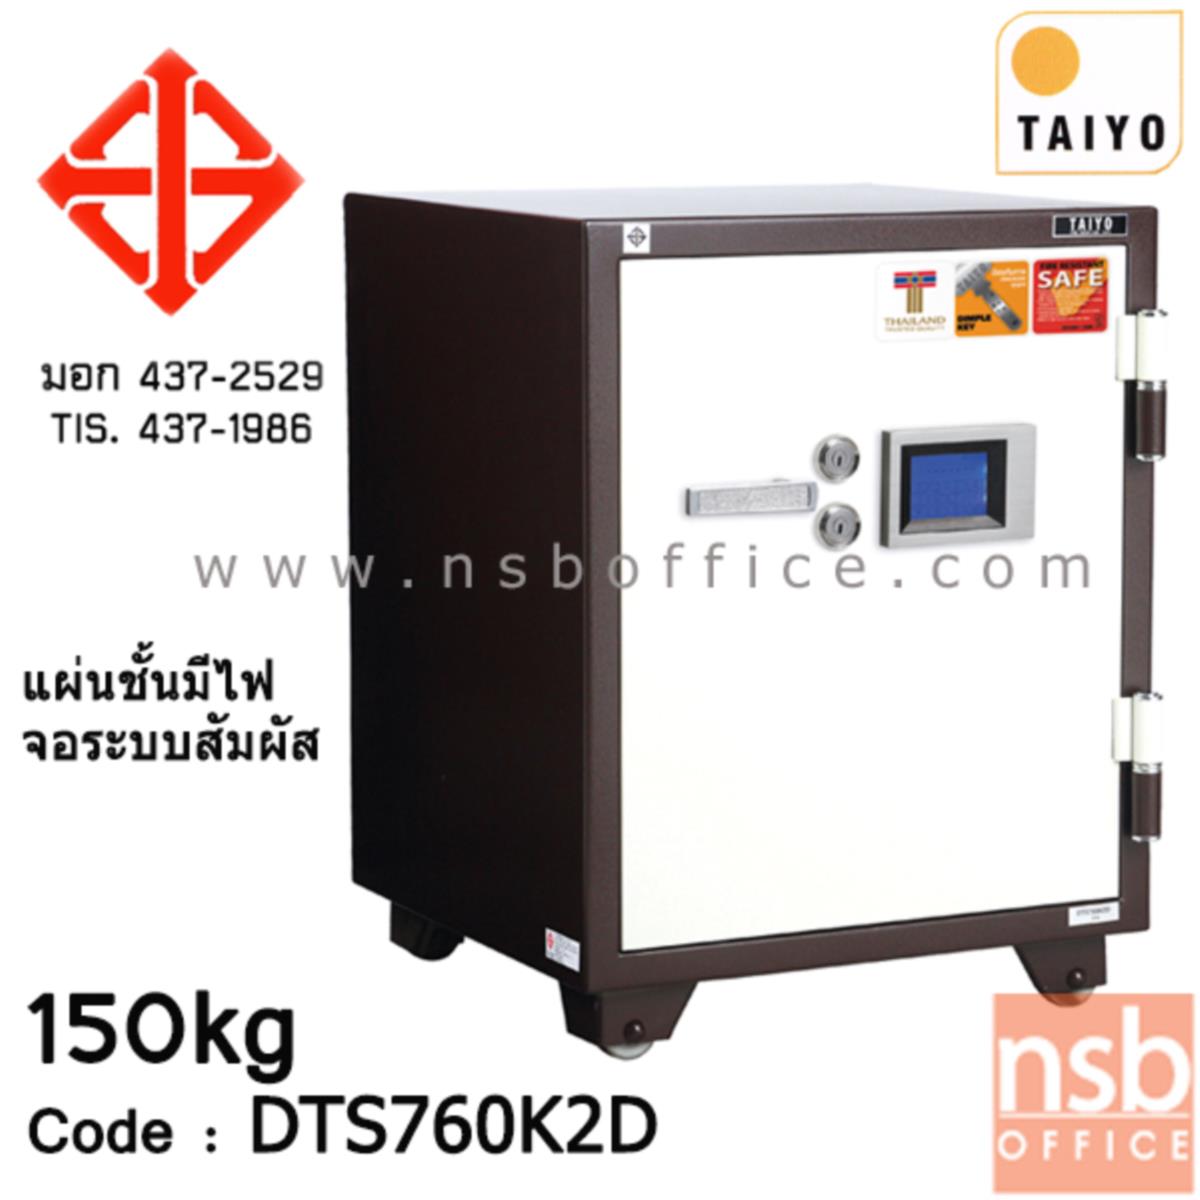 F01A059:ตู้เซฟ Taiyo ระบบดิจิตอล จอสัมผัส รุ่น 150 กก. 2 กุญแจ 1 รหัส (DTS 760 K2D)   